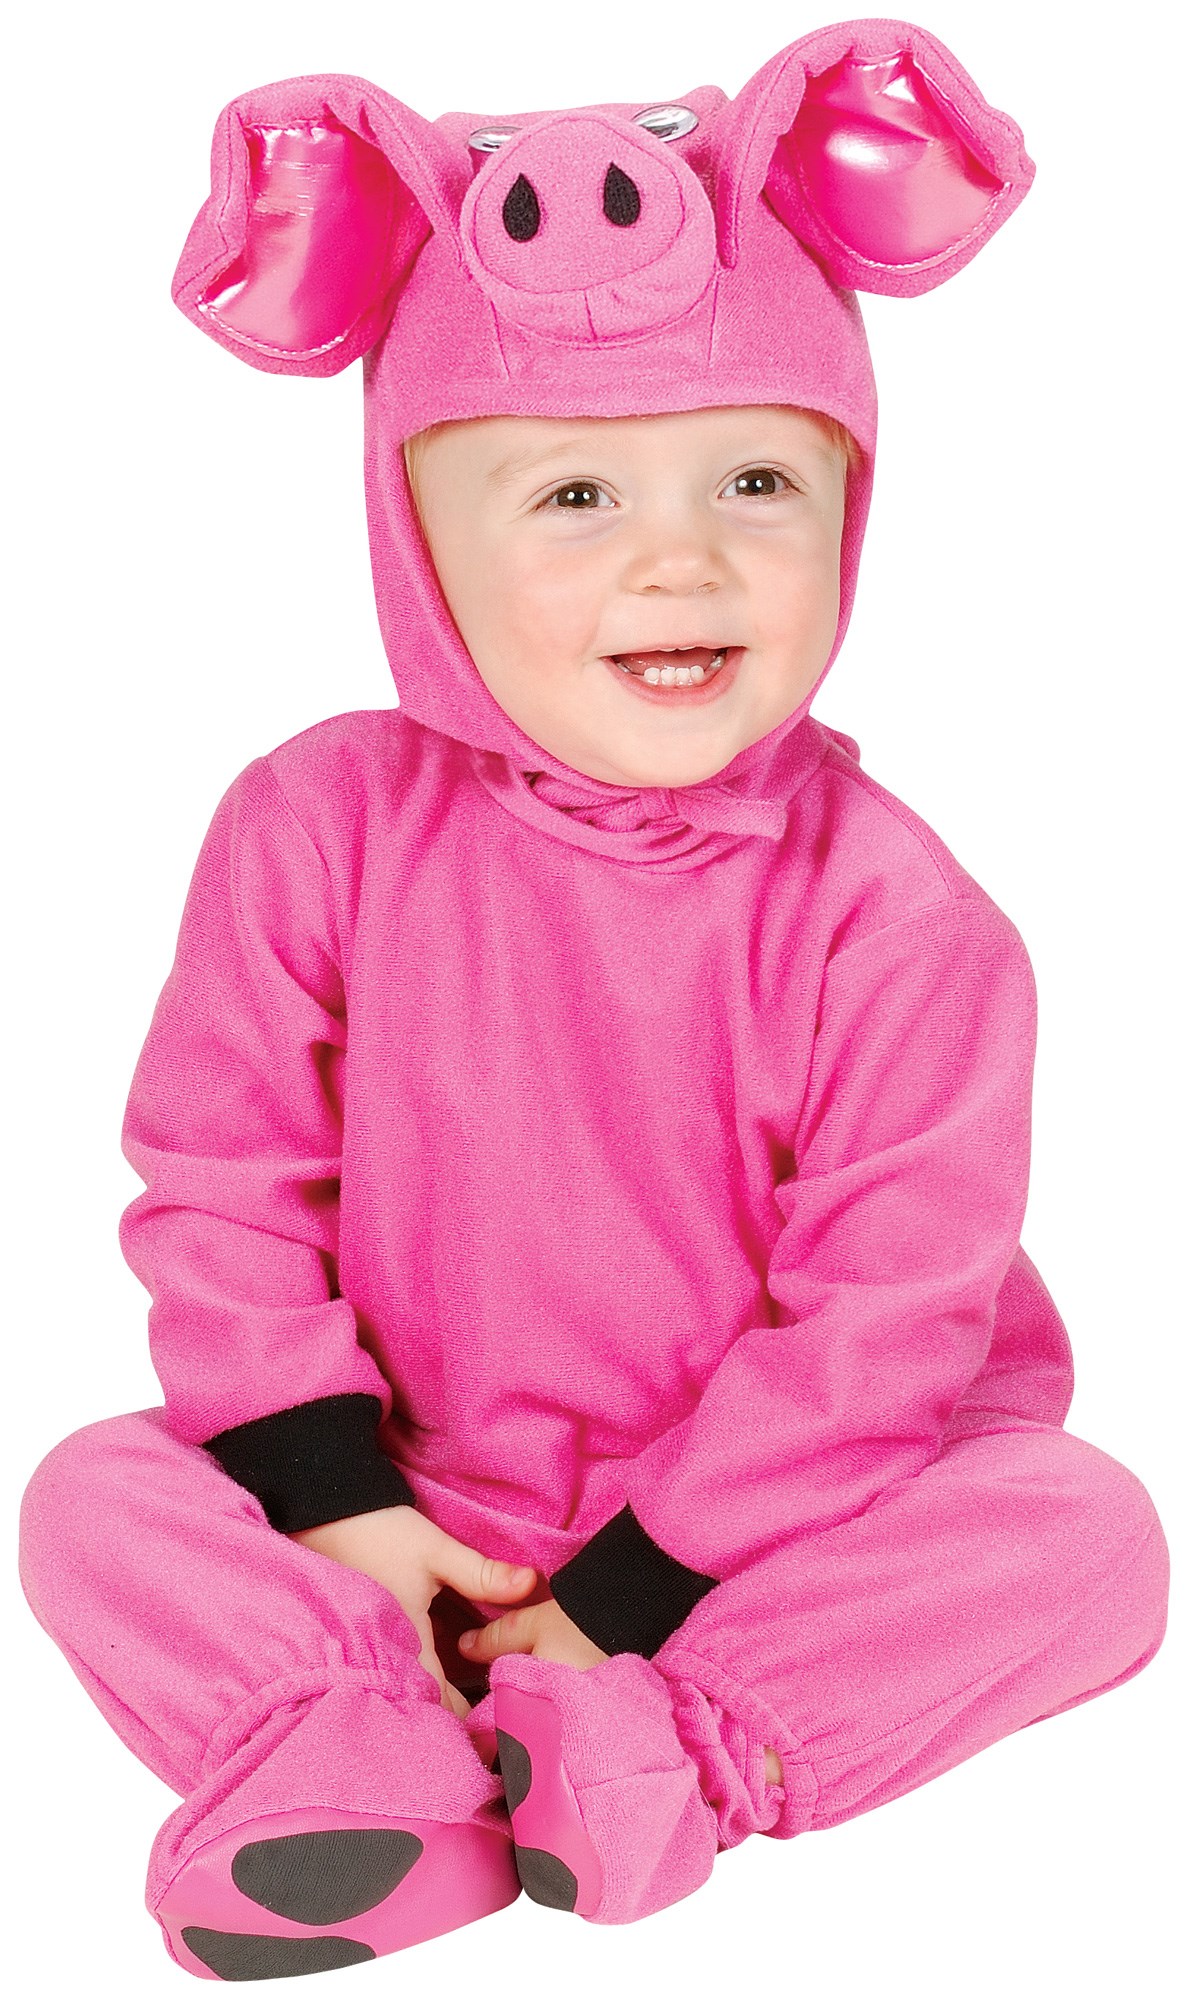 Little Pig Infant Costume